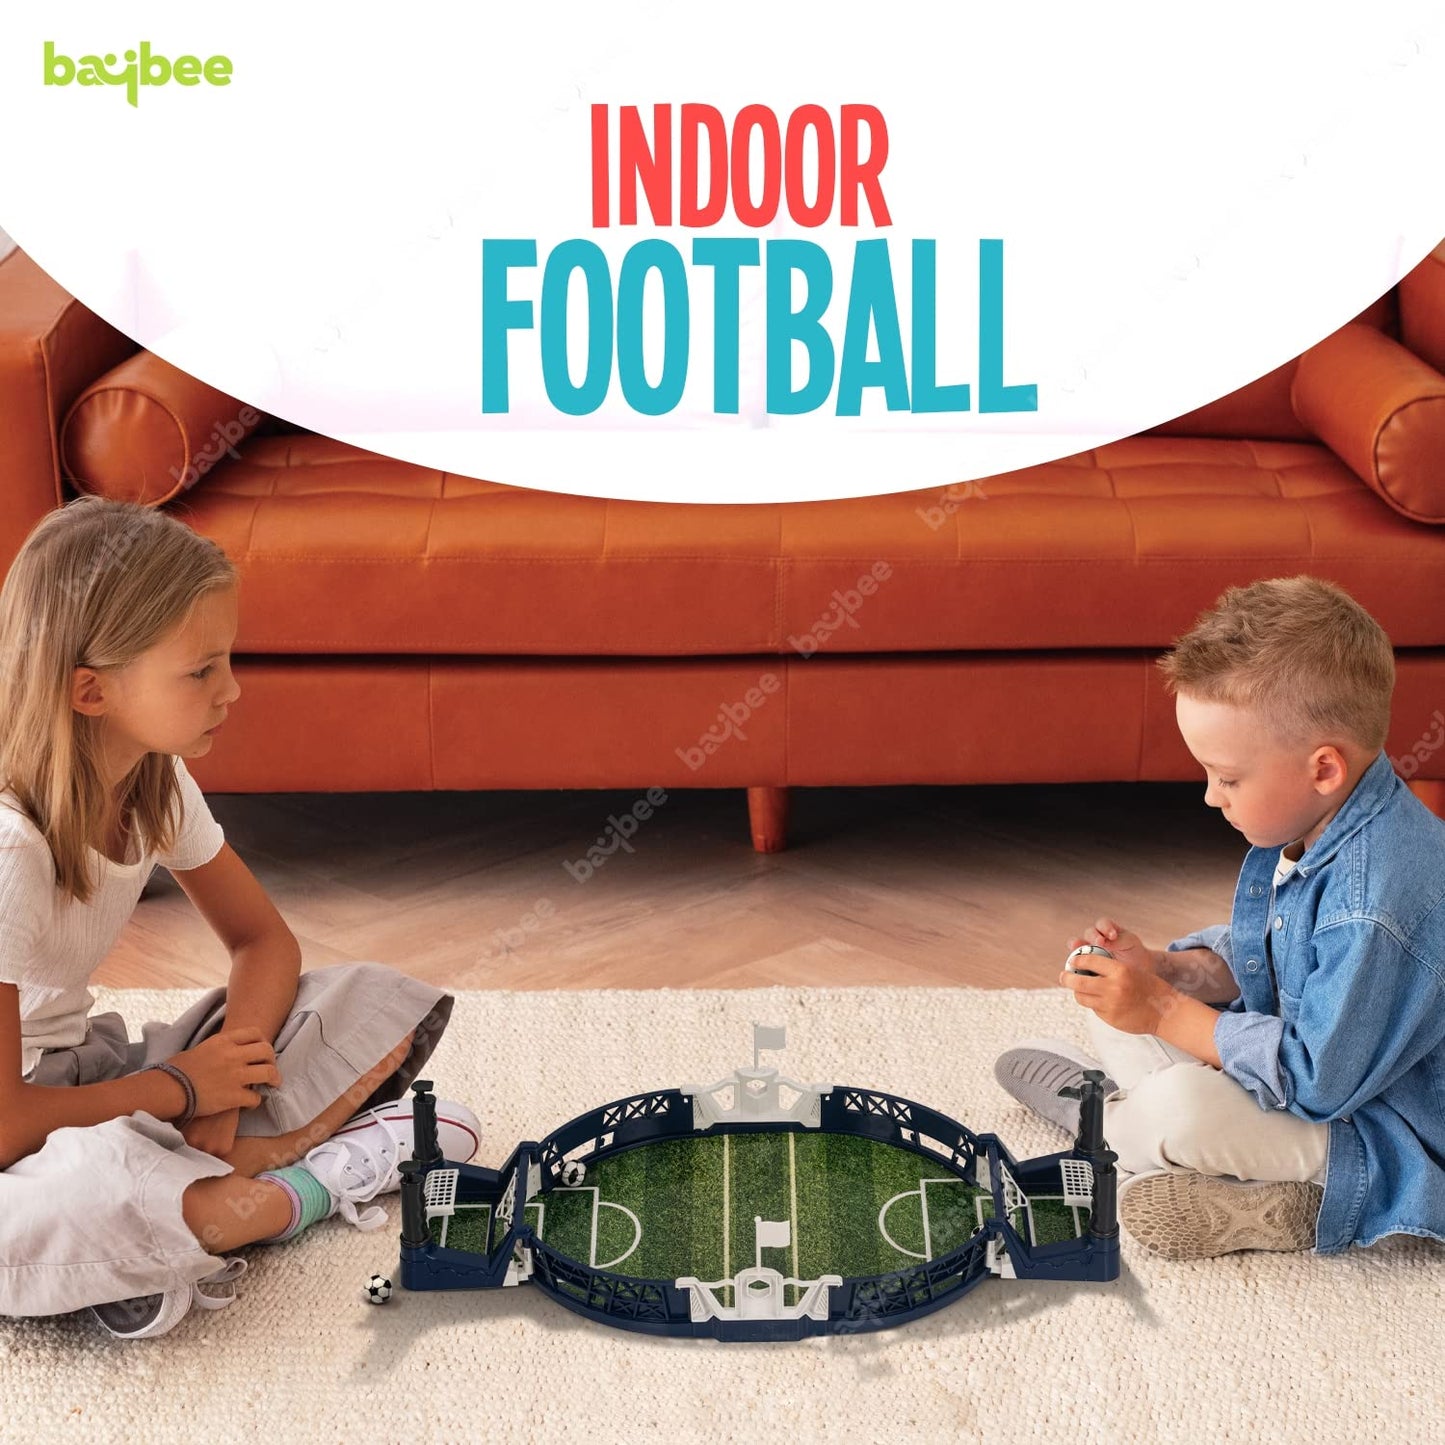 Baybee Mini Tabletop Football Board Indoor Games for Kids